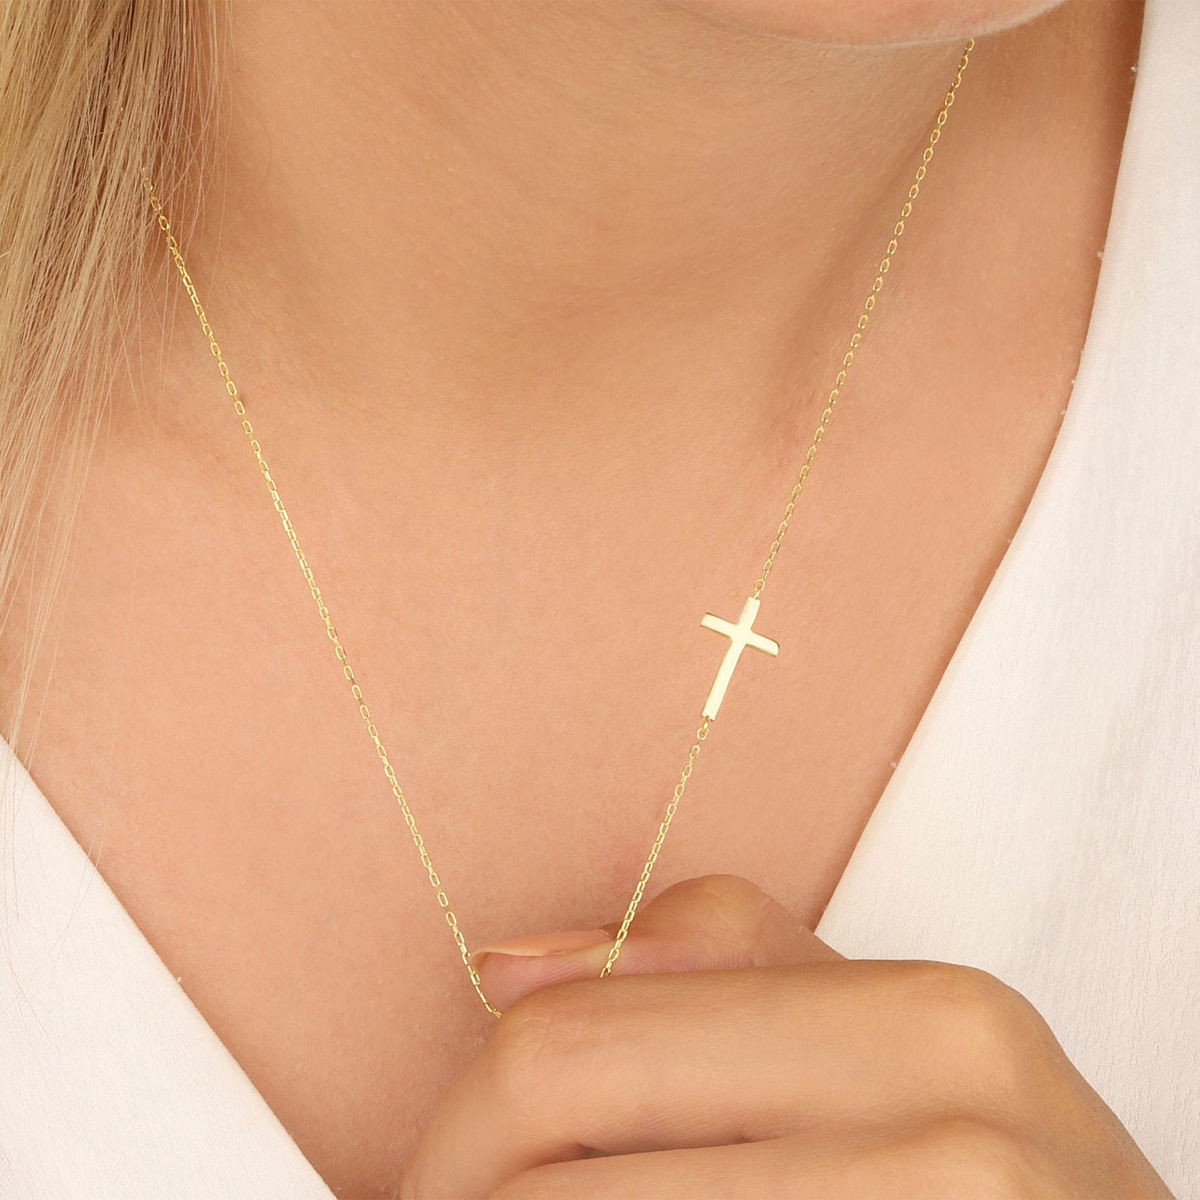 Bridal Jewelry Vumari 14k Gold Stainless Steel Cross Pendant Chain Necklace Women Jewelry | SHK-03